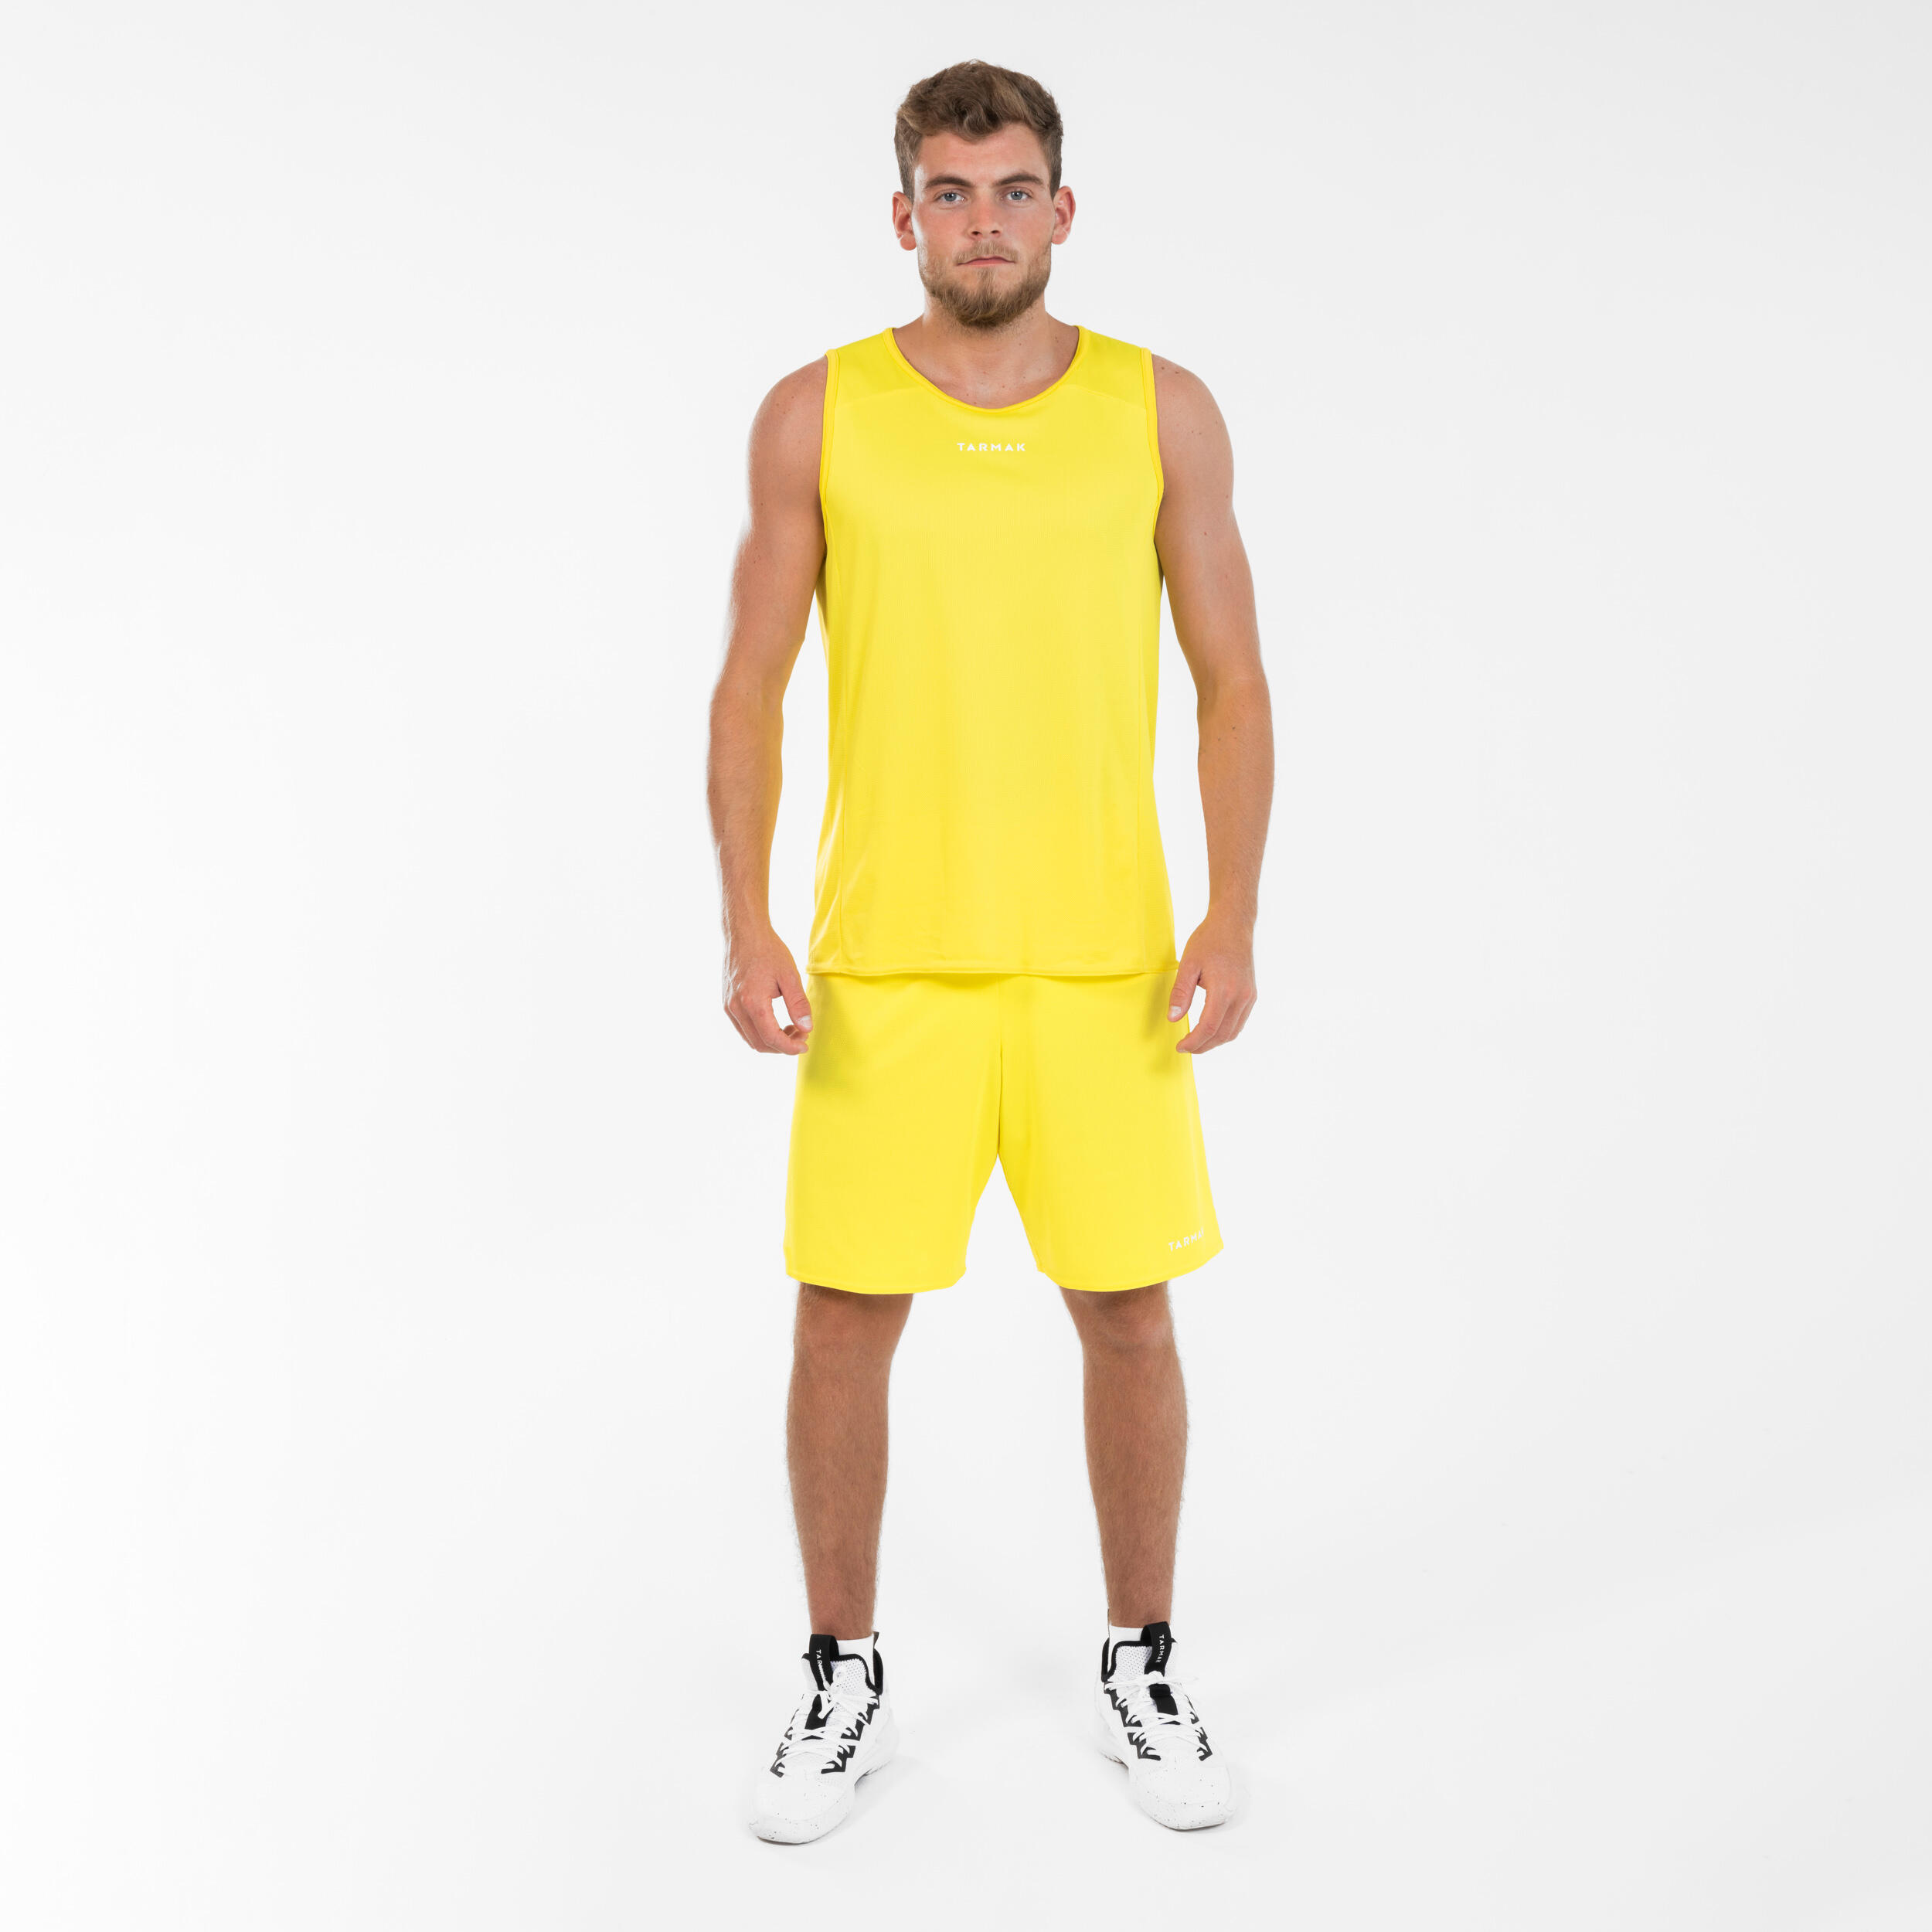 Men's/Women's Sleeveless Basketball Jersey T100 - Yellow 4/4